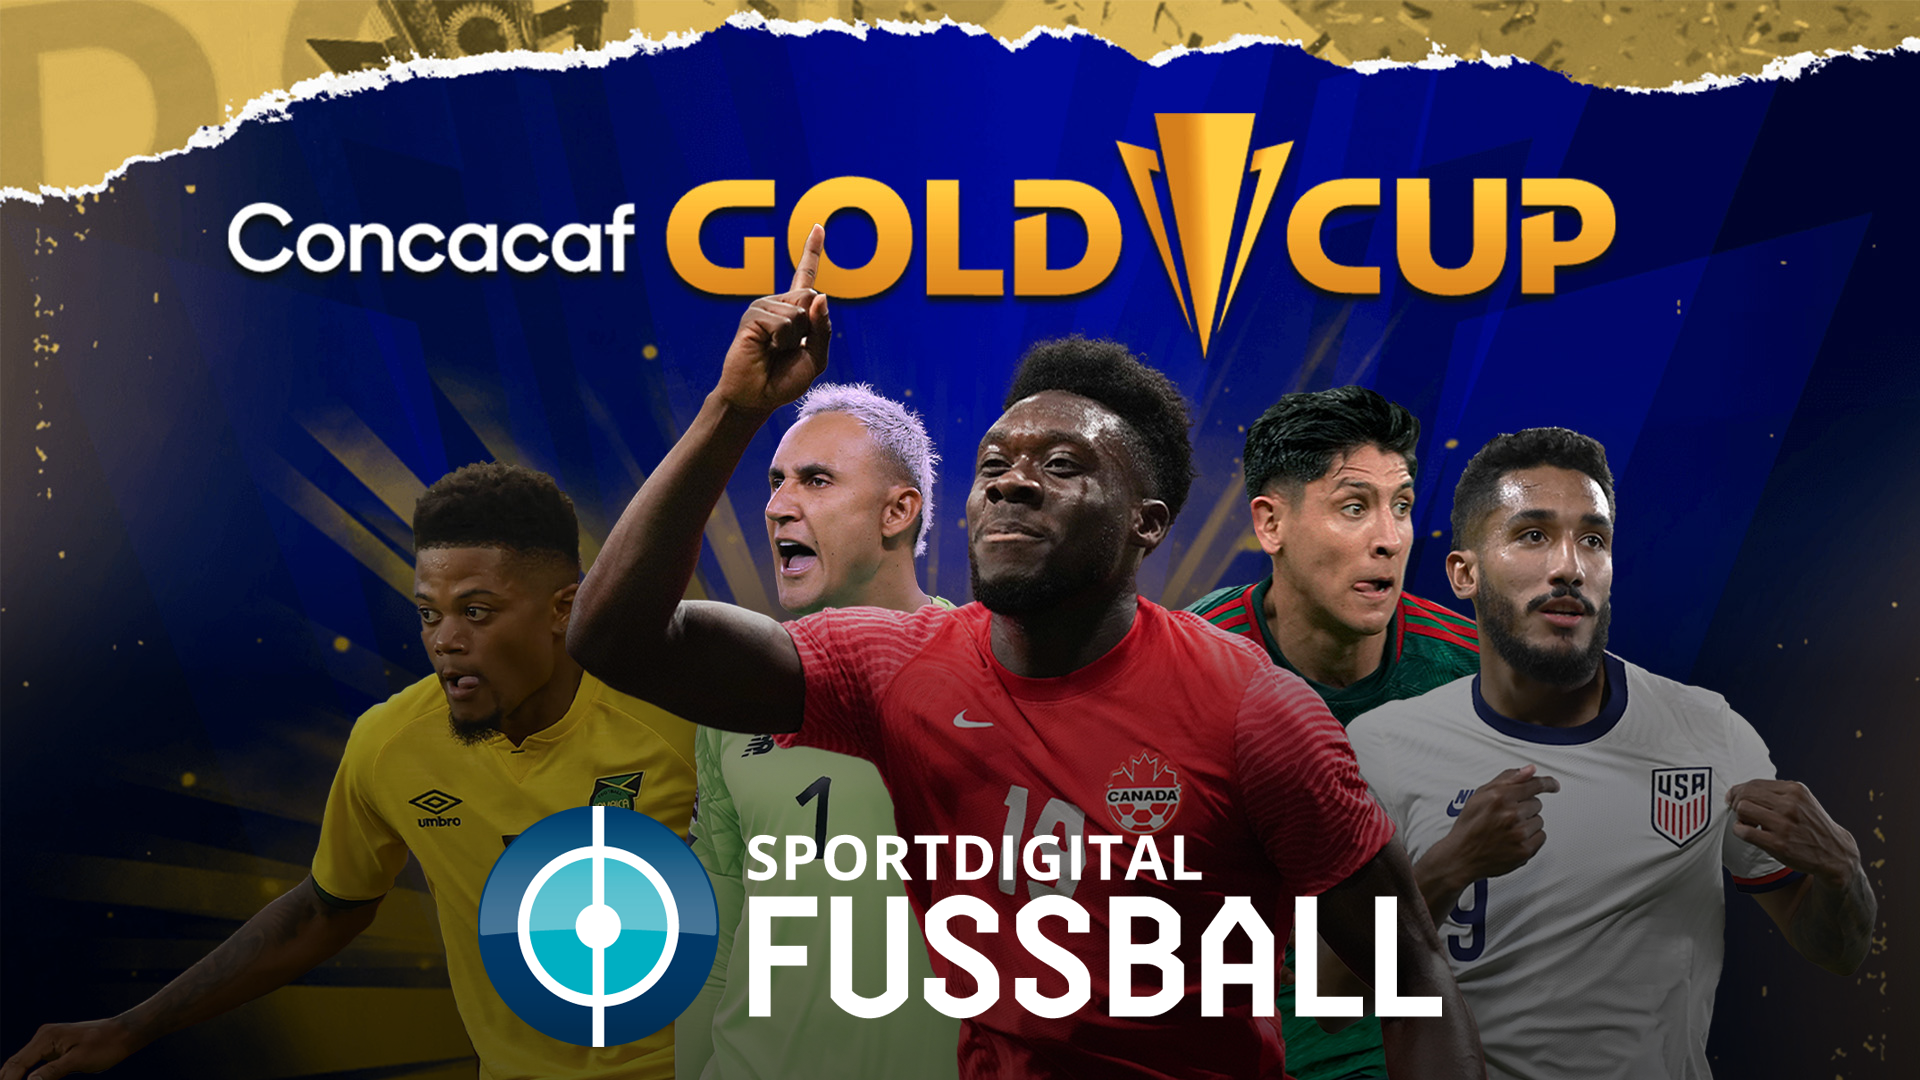 Sportdigital FUSSBALL überträgt live den CONCACAF Gold Cup 2023!